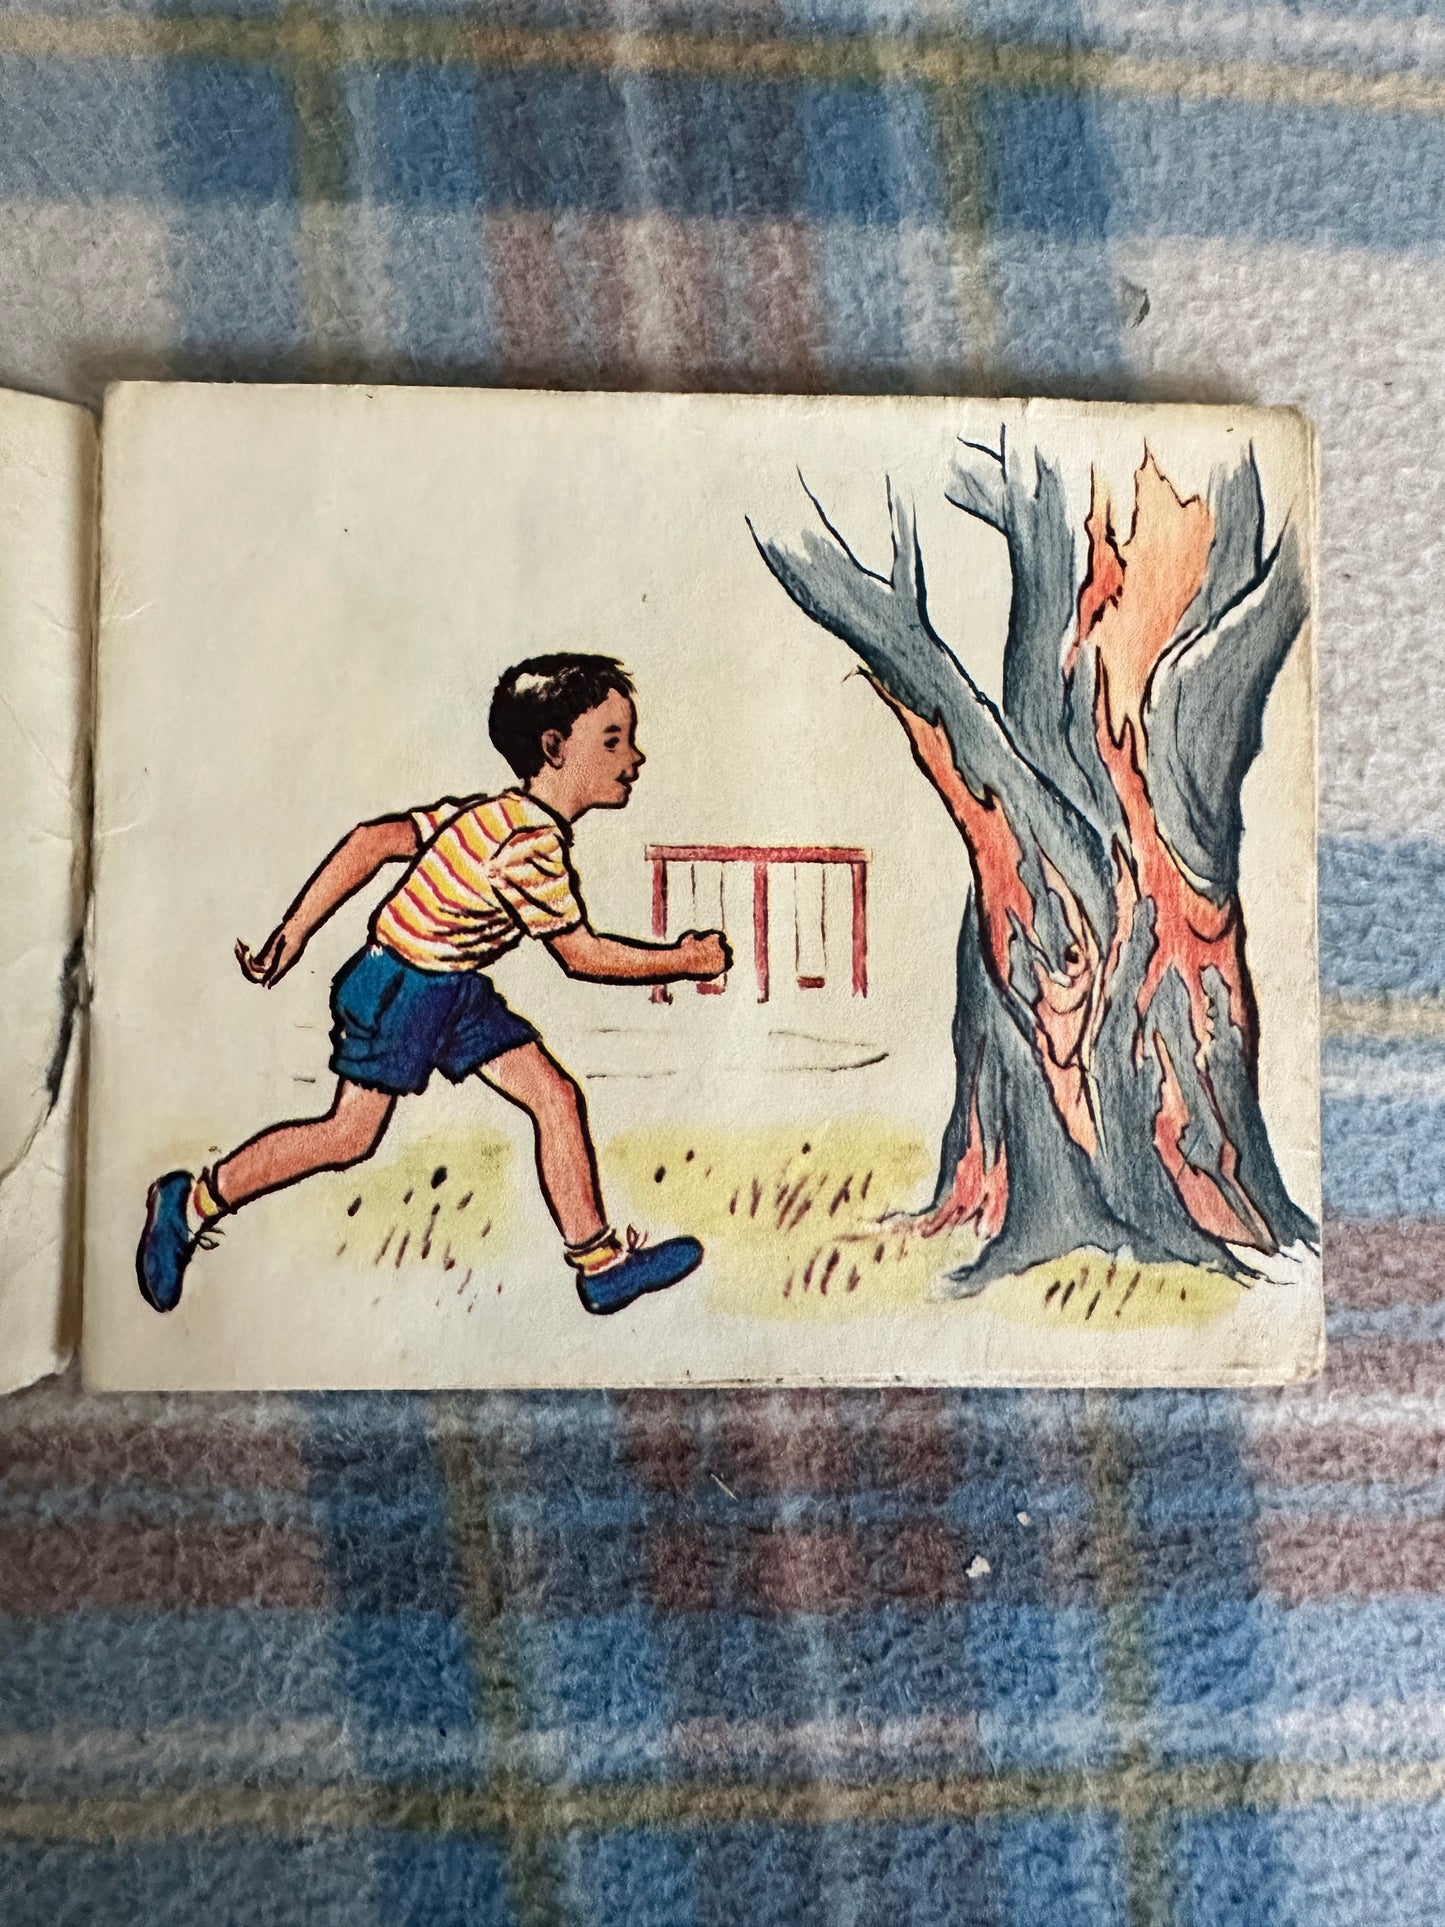 1960’s Commonweath Readers: Tim Climbs A Tree - Beverley Randell & Edwina Bell(Price Milburn)